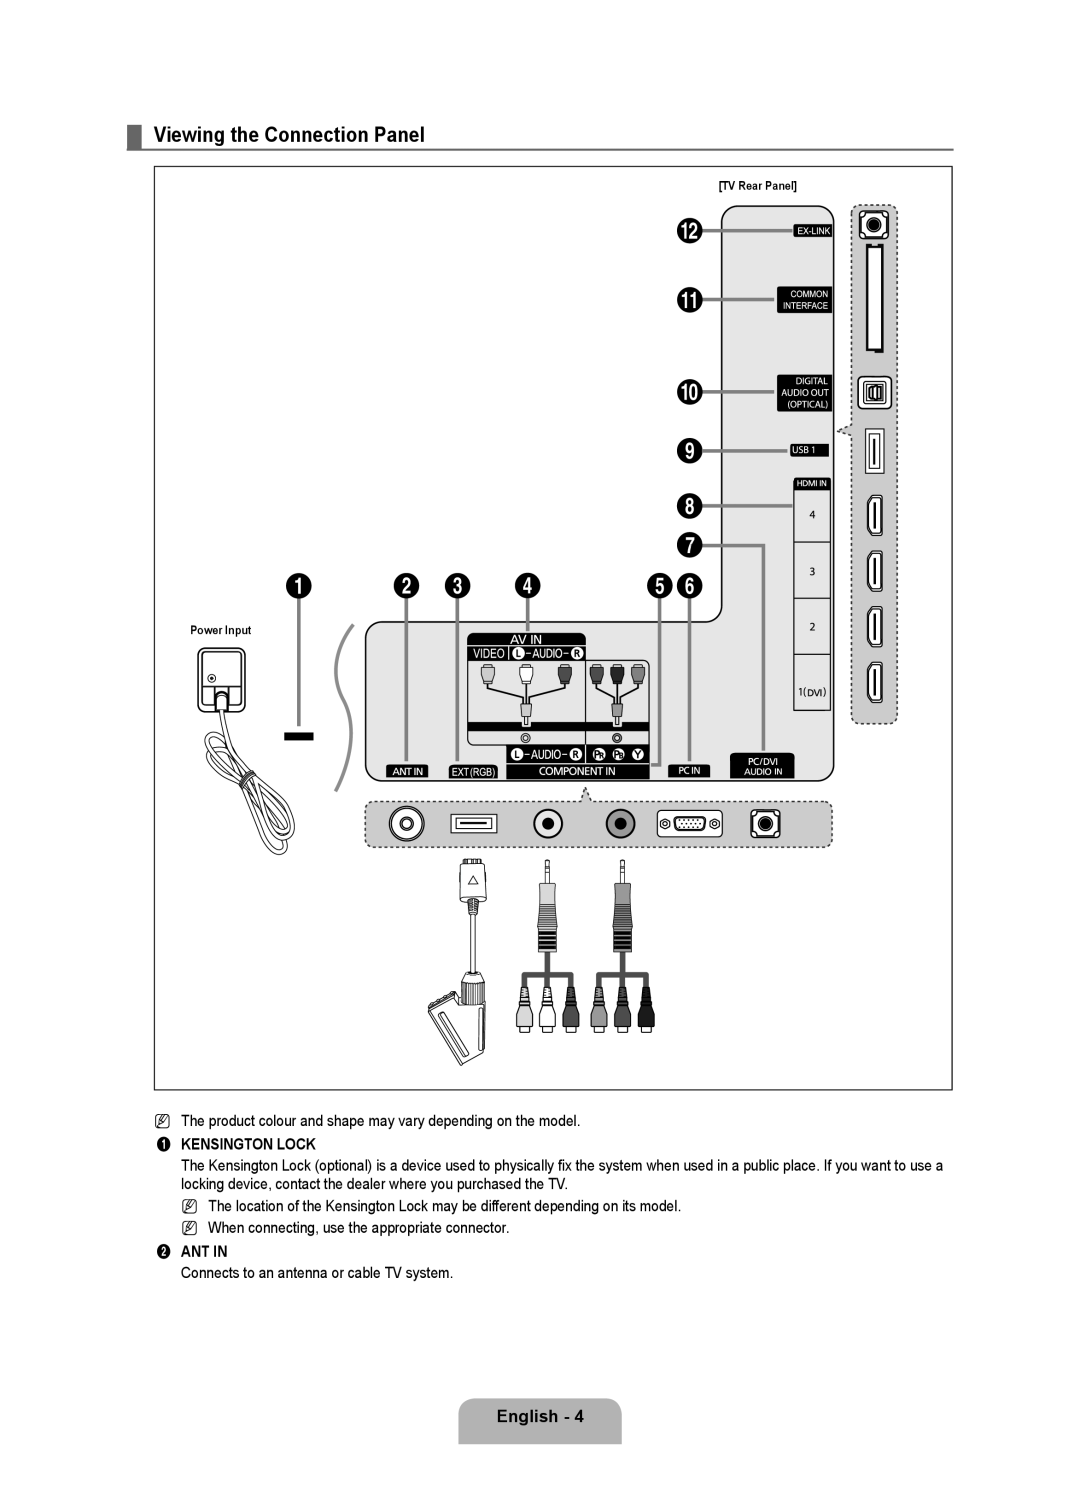 Samsung UE46B6000VWXZG, UE40B6000VWXXN, UE40B6000VWXUA manual Viewing the Connection Panel, Kensington Lock, Ant In, English 